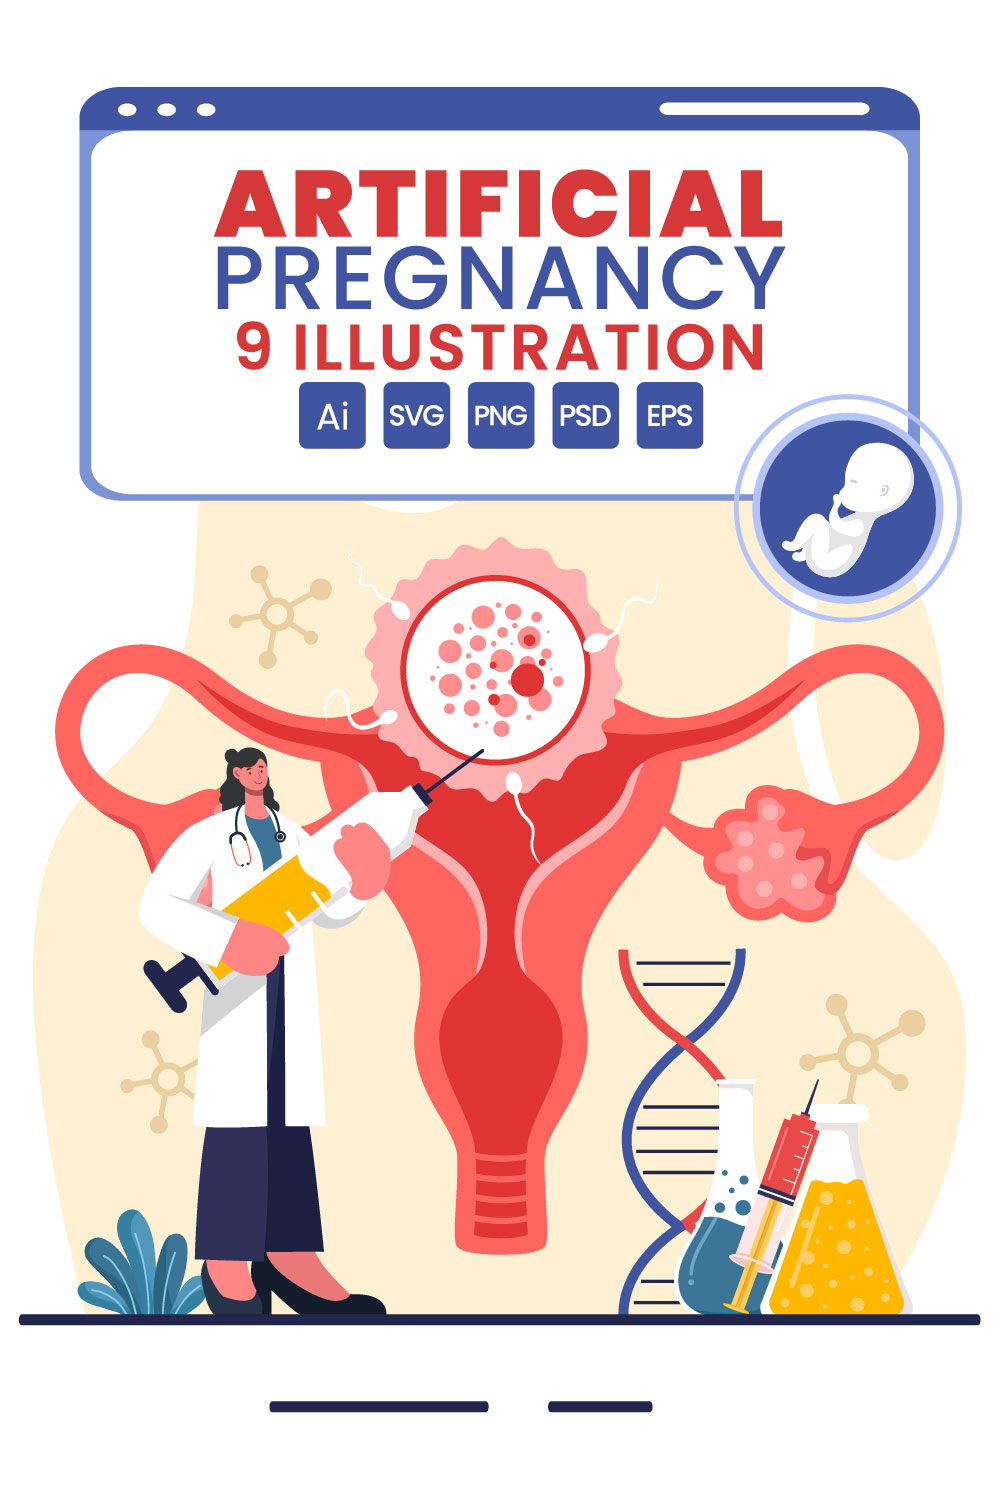 9 Artificial Pregnancy Illustration pinterest preview image.